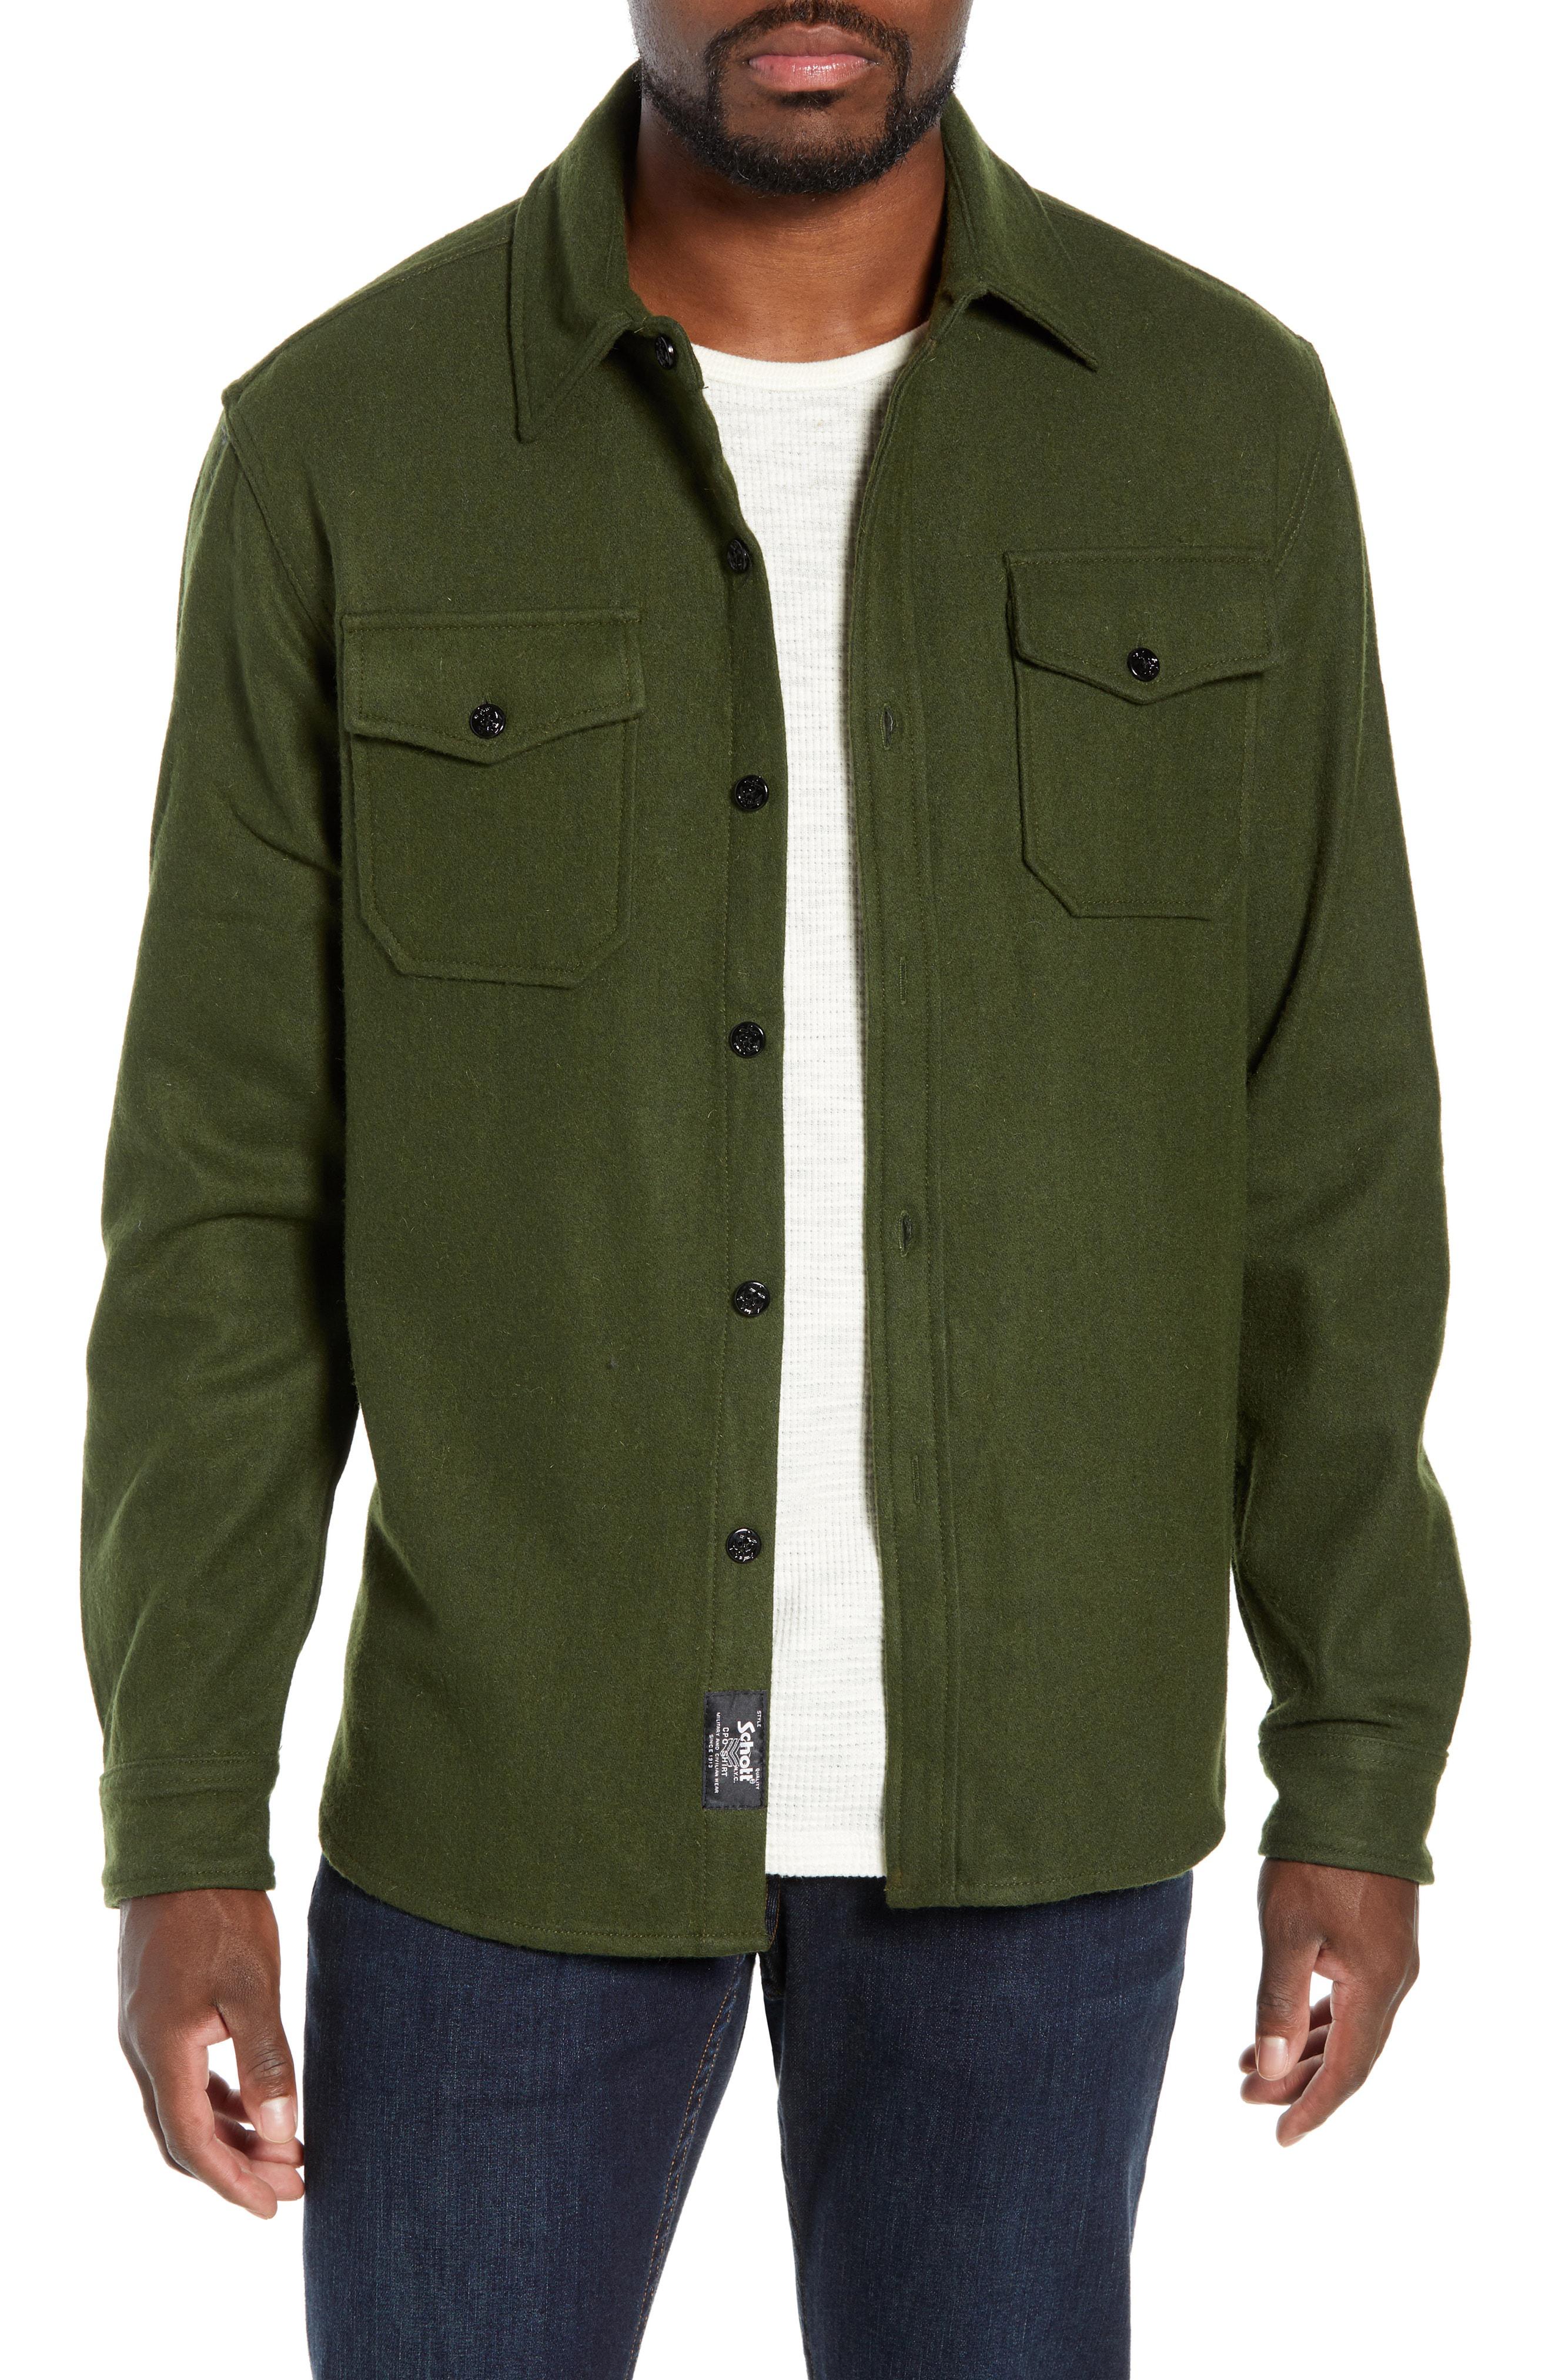 Lyst - Schott Nyc Cpo Wool Blend Work Shirt in Green for Men